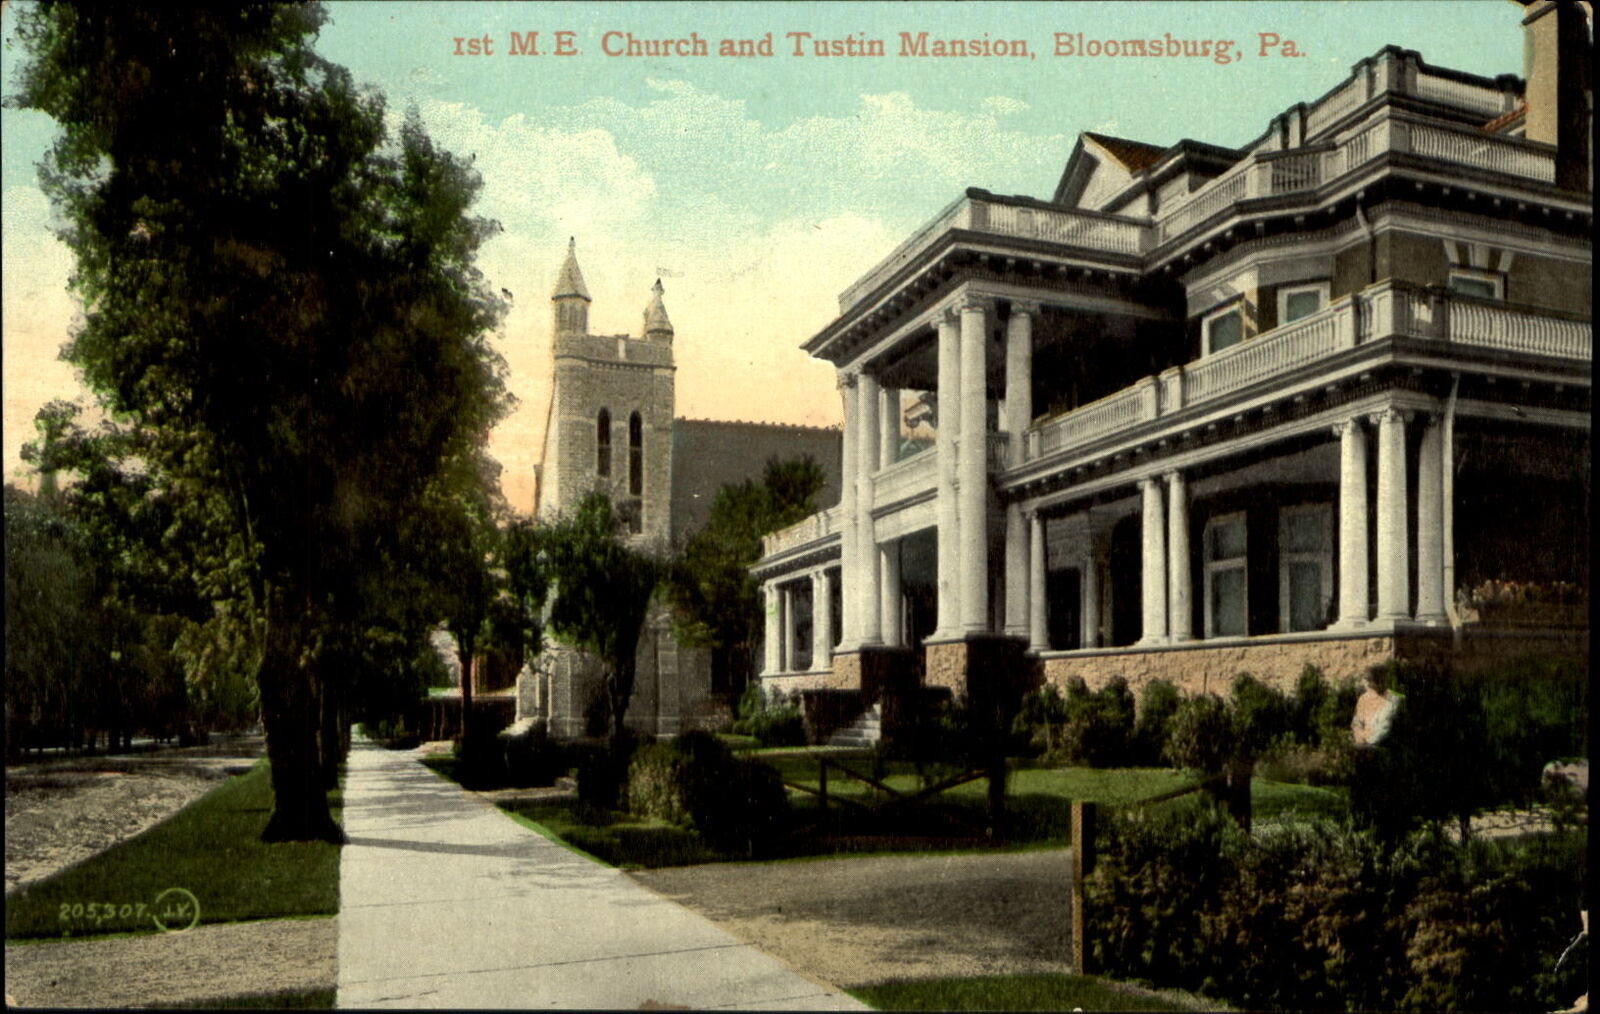 First M.E. Church & Tustin Mansion Bloomsburg PA~1908 to G. Stimmel SELLERSVILLE